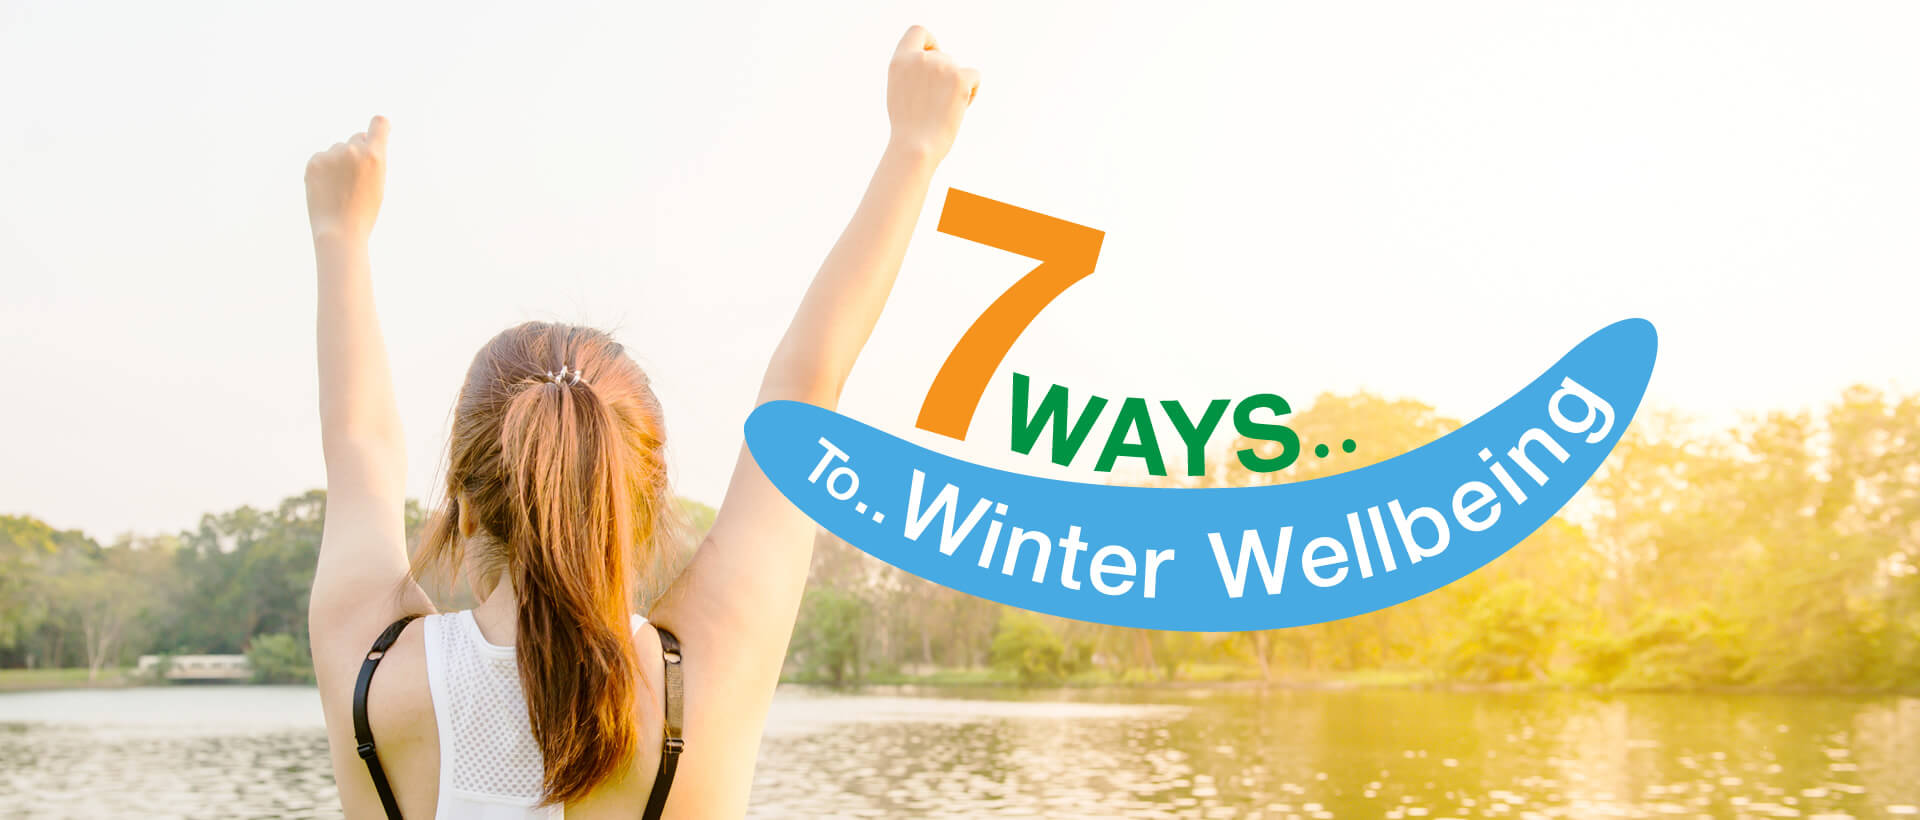 7 ways to winter wellbeing